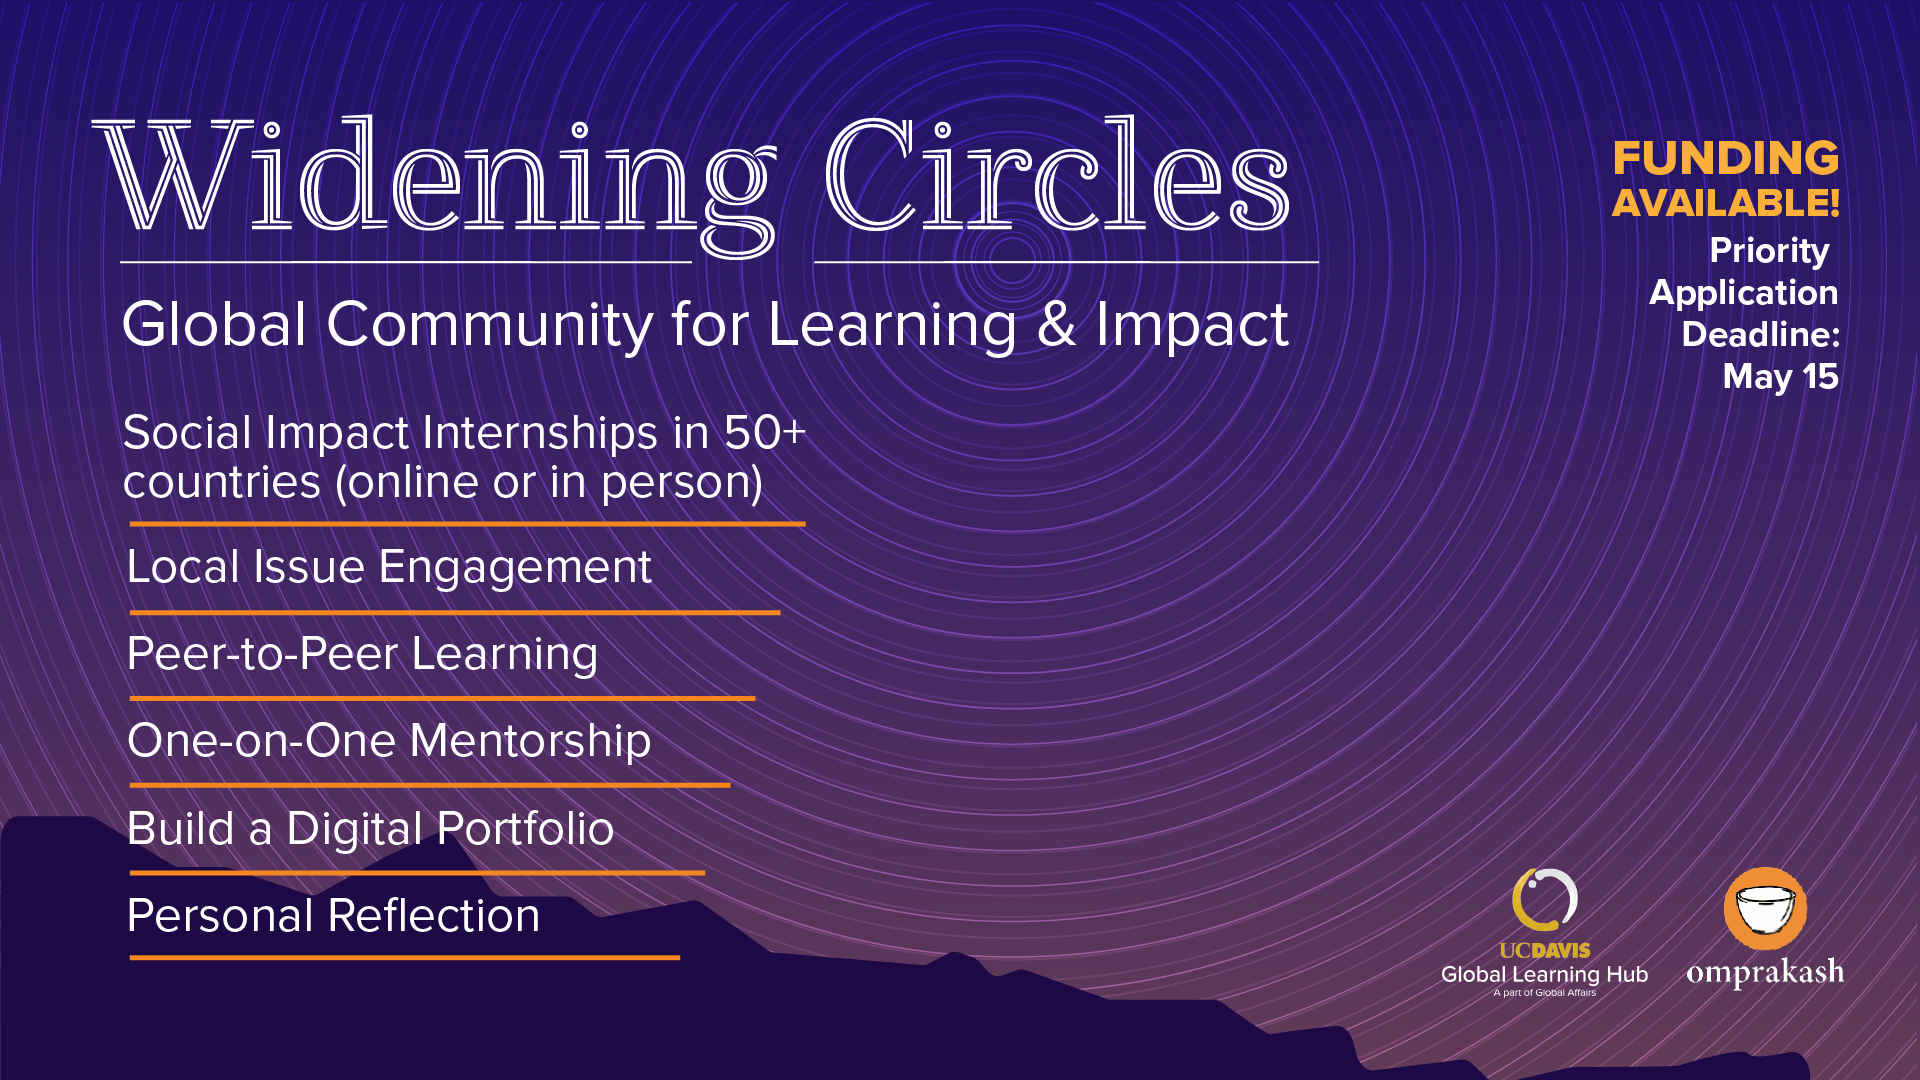 Graphic for Widening Circles internship program